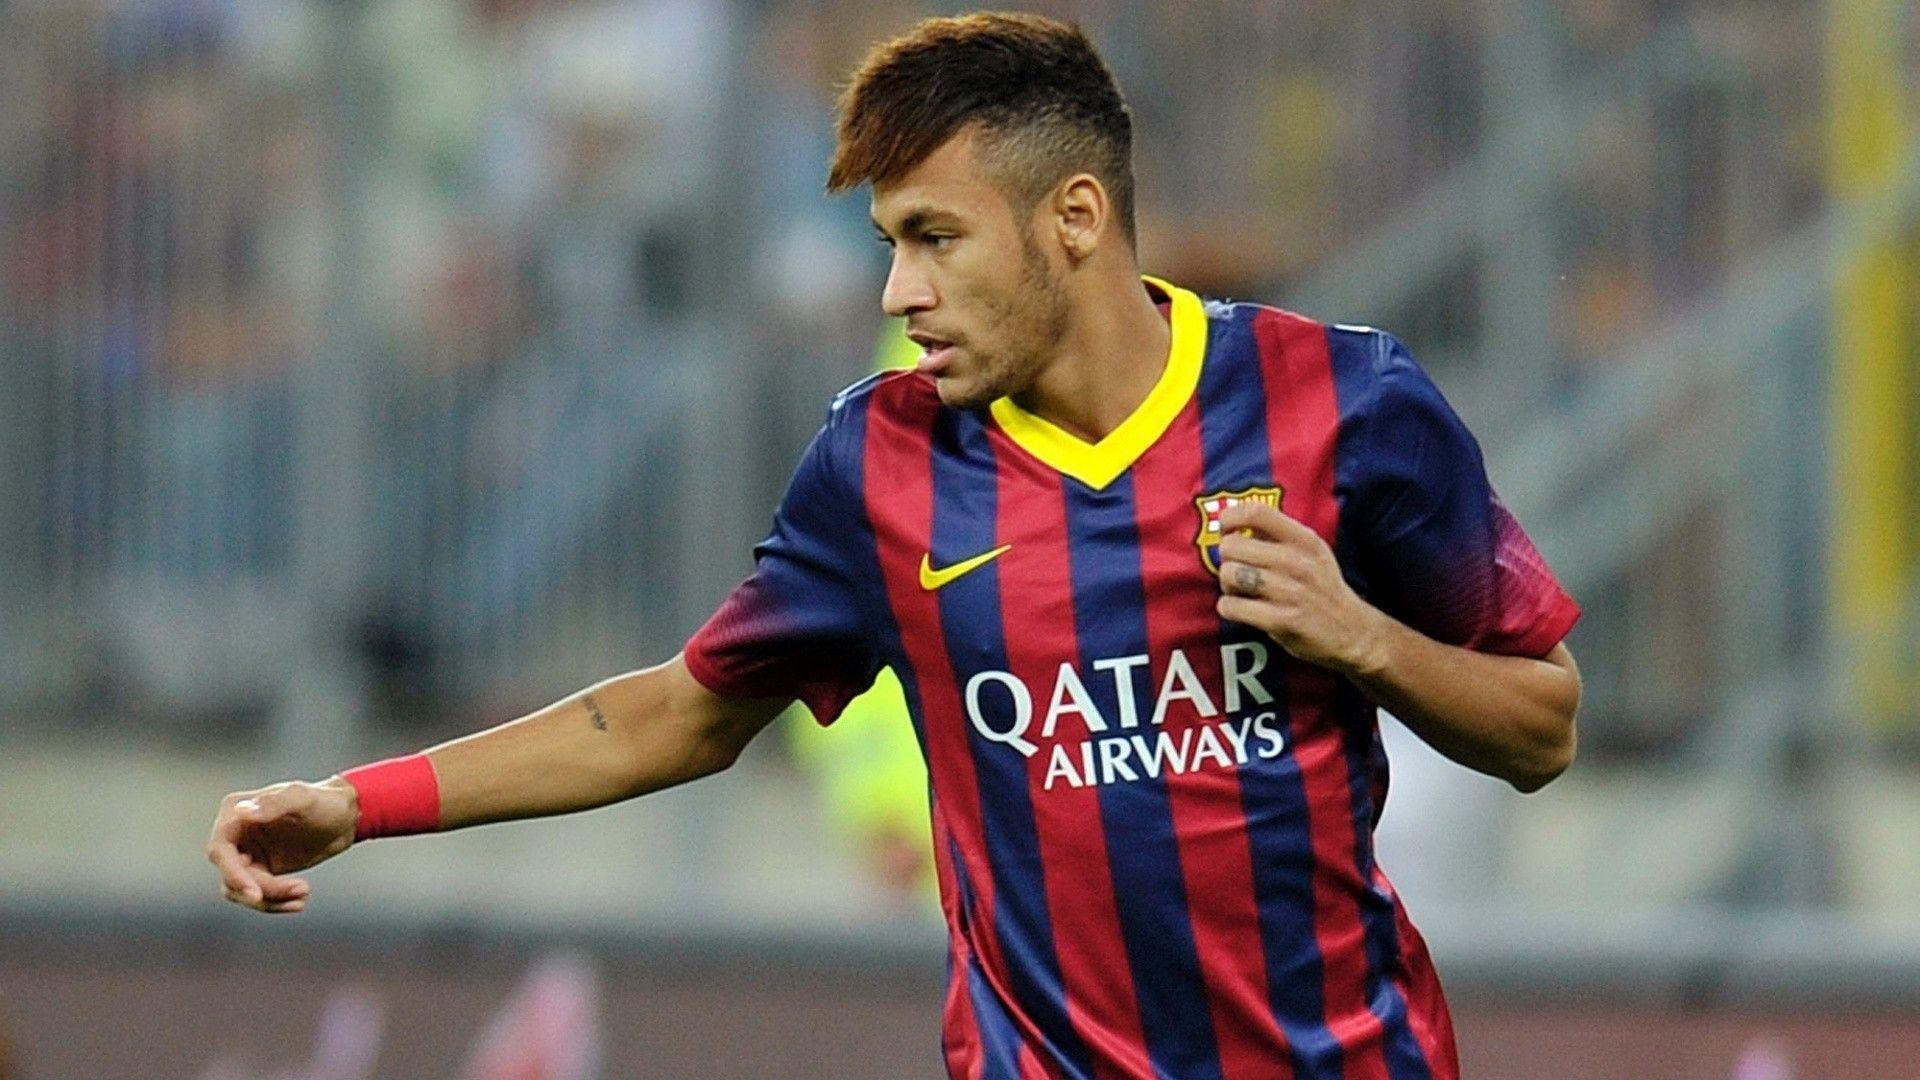 New Neymar Barcelona kit 2014 in high resolution image